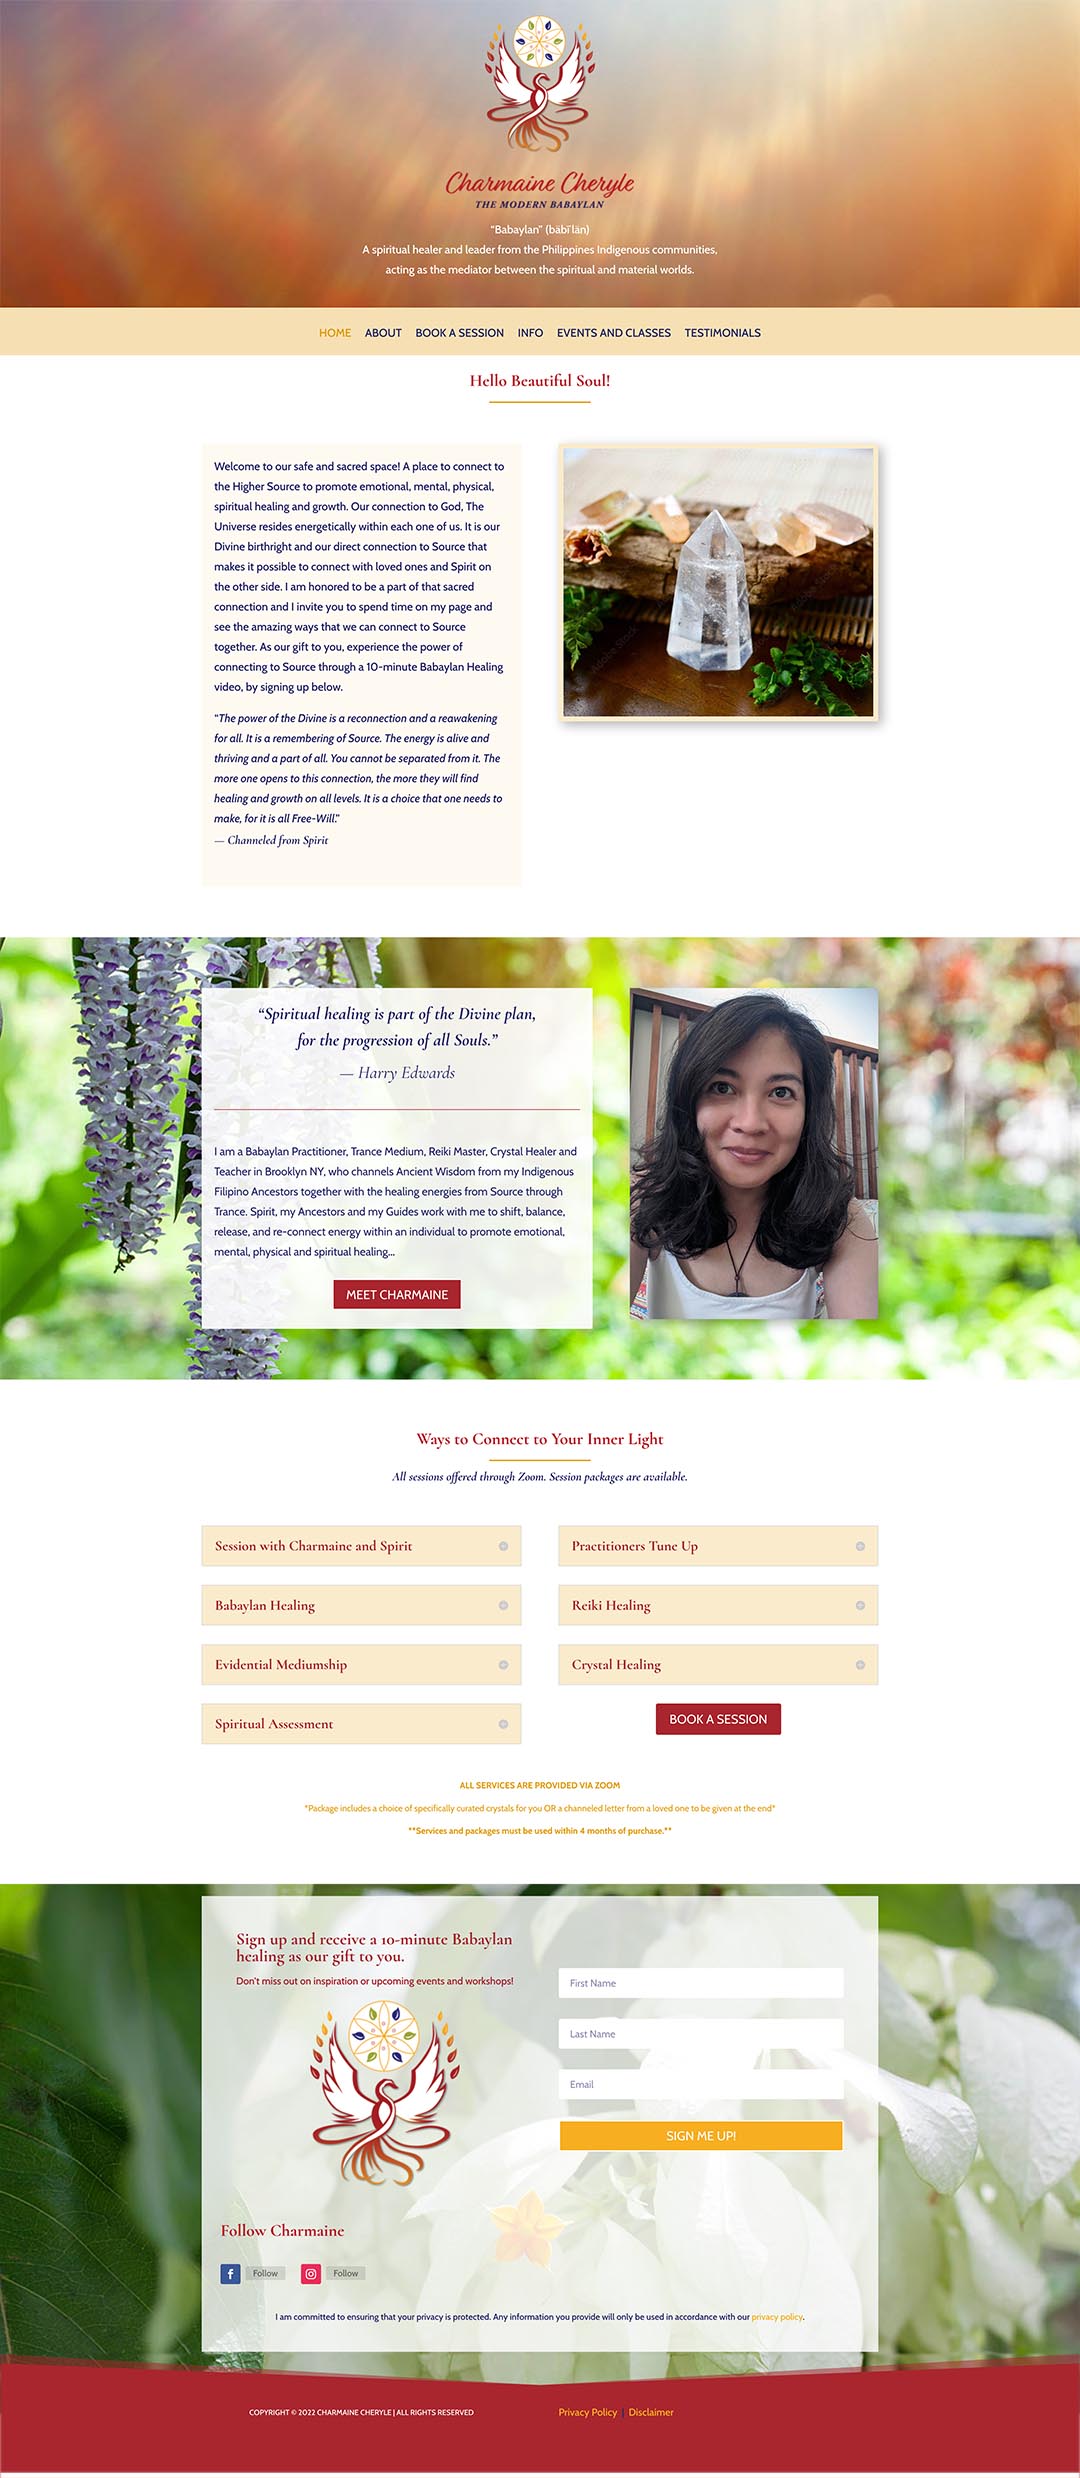 charmaine cheryle website design